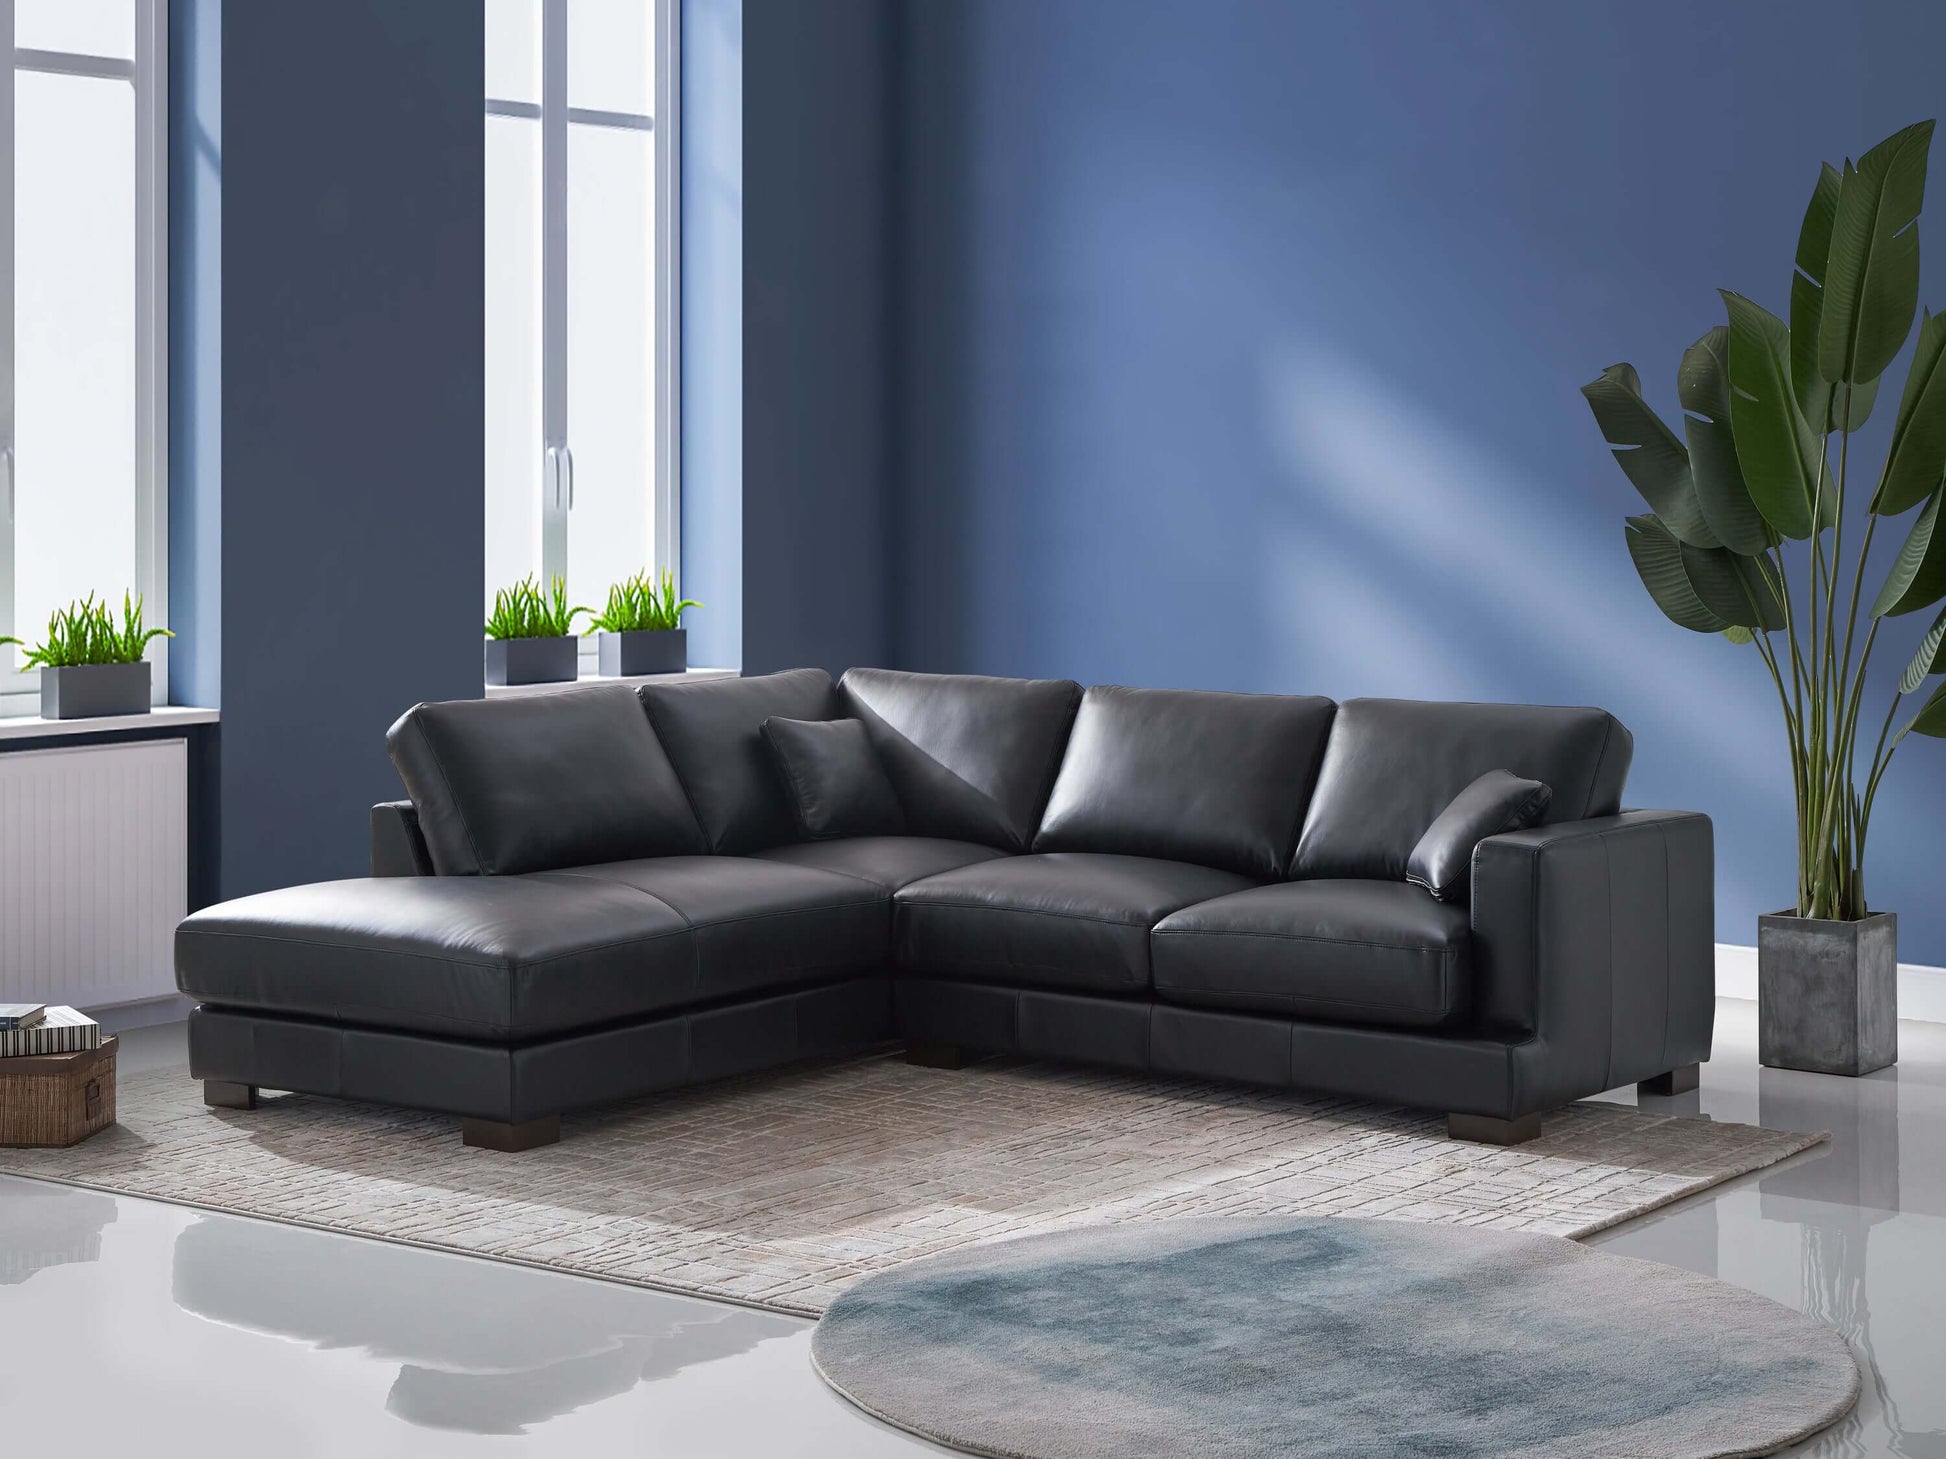 Geralyn Sectional Corner Chaise Sofa w/2 Throw Pillows, Genuine Leather Black - Revel Sofa 